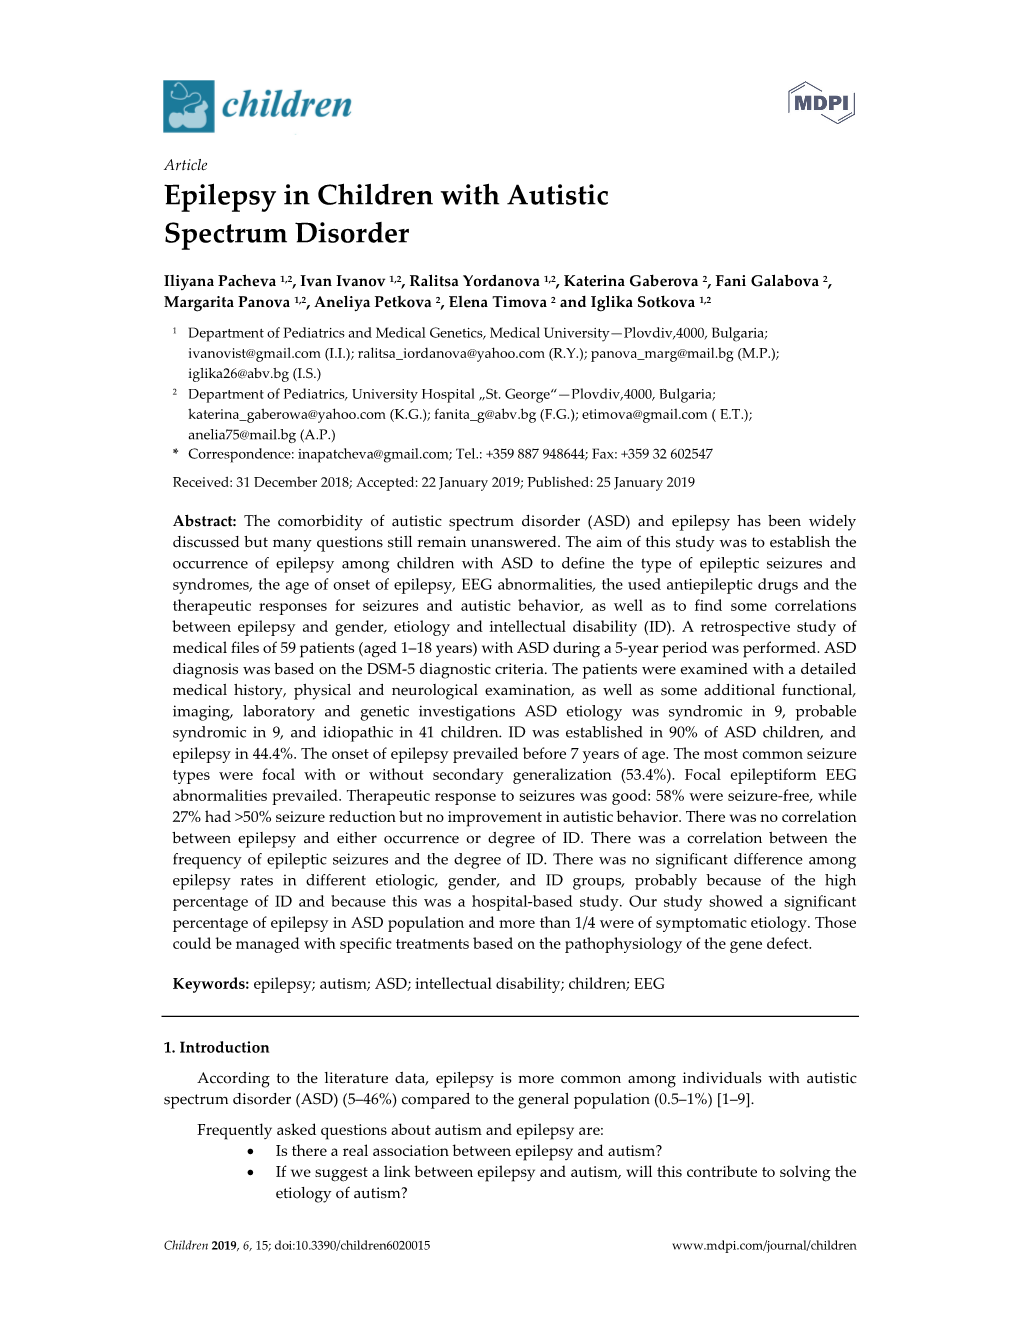 Epilepsy in Children with Autistic Spectrum Disorder